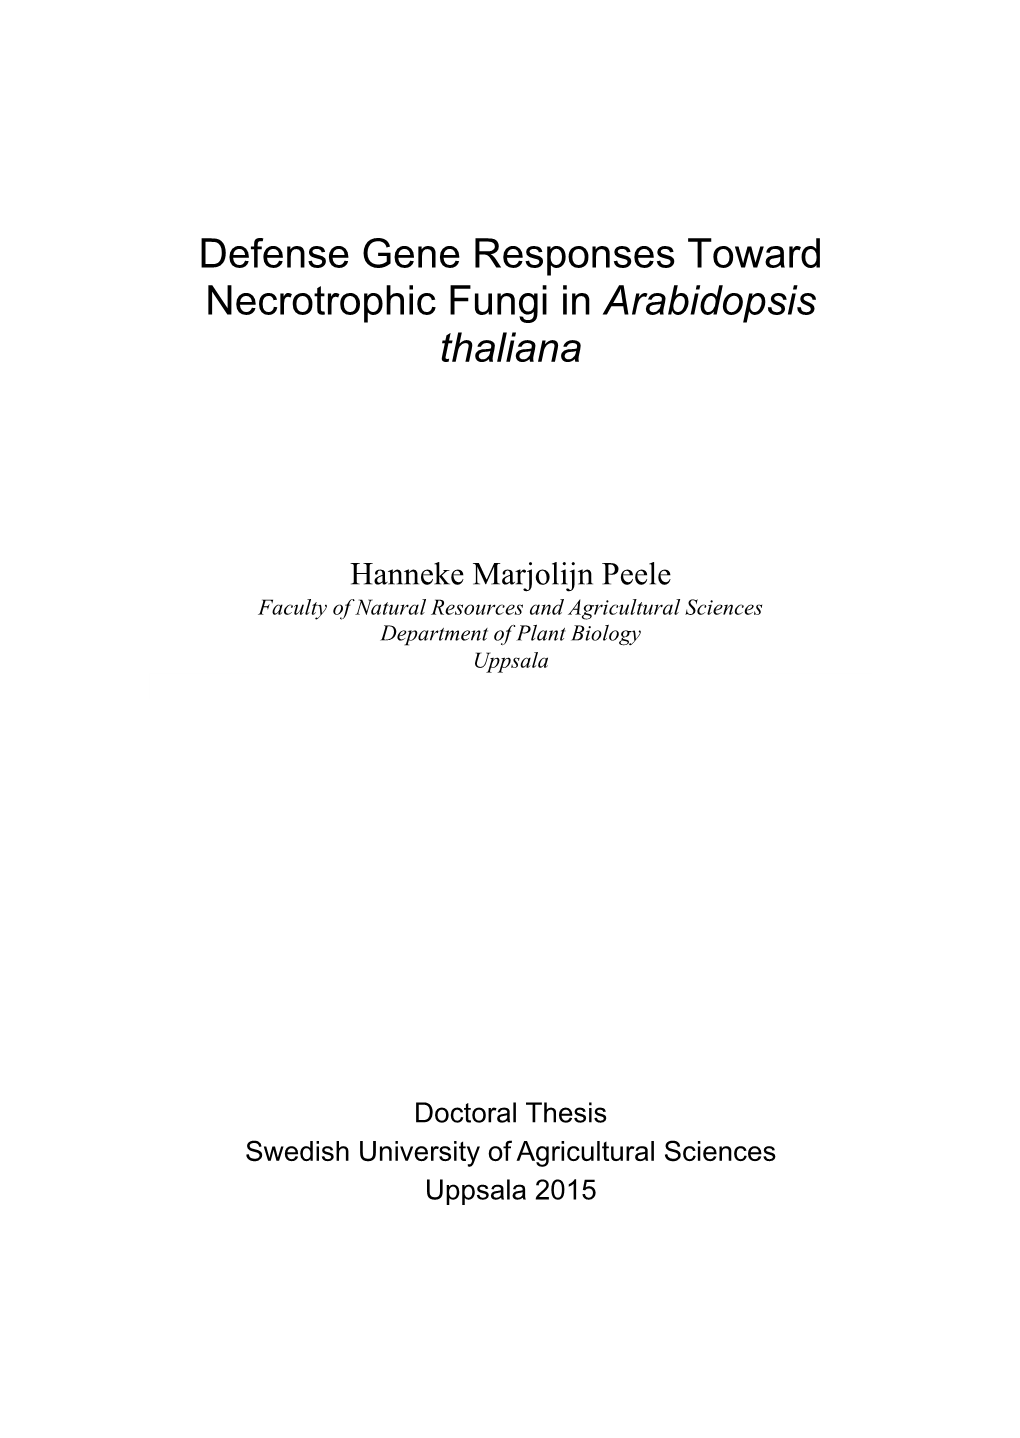 Defense Gene Responses Toward Necrotrophic Fungi in Arabidopsis Thaliana